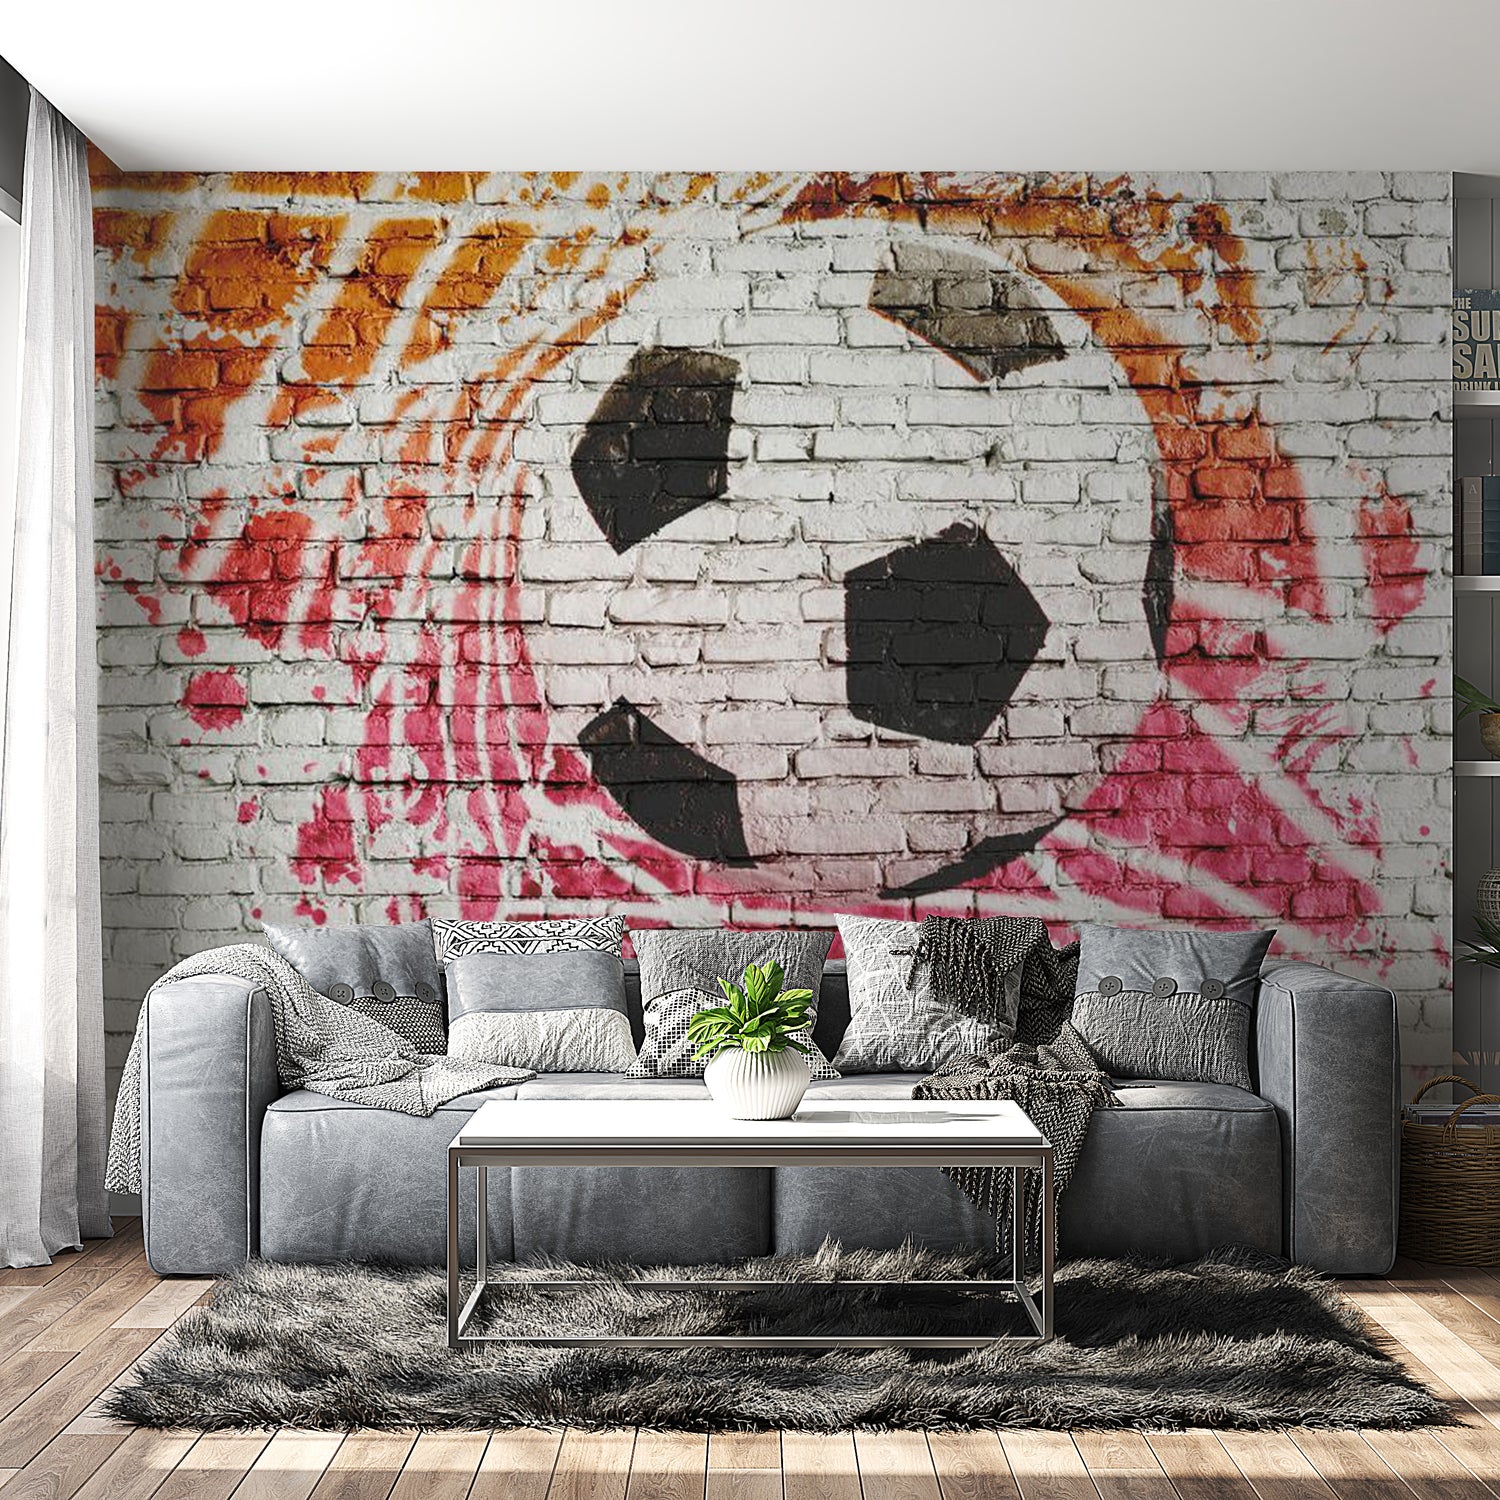 Peel & Stick Football Wall Mural - Street Football Brick Wall - Removable Wall Decals